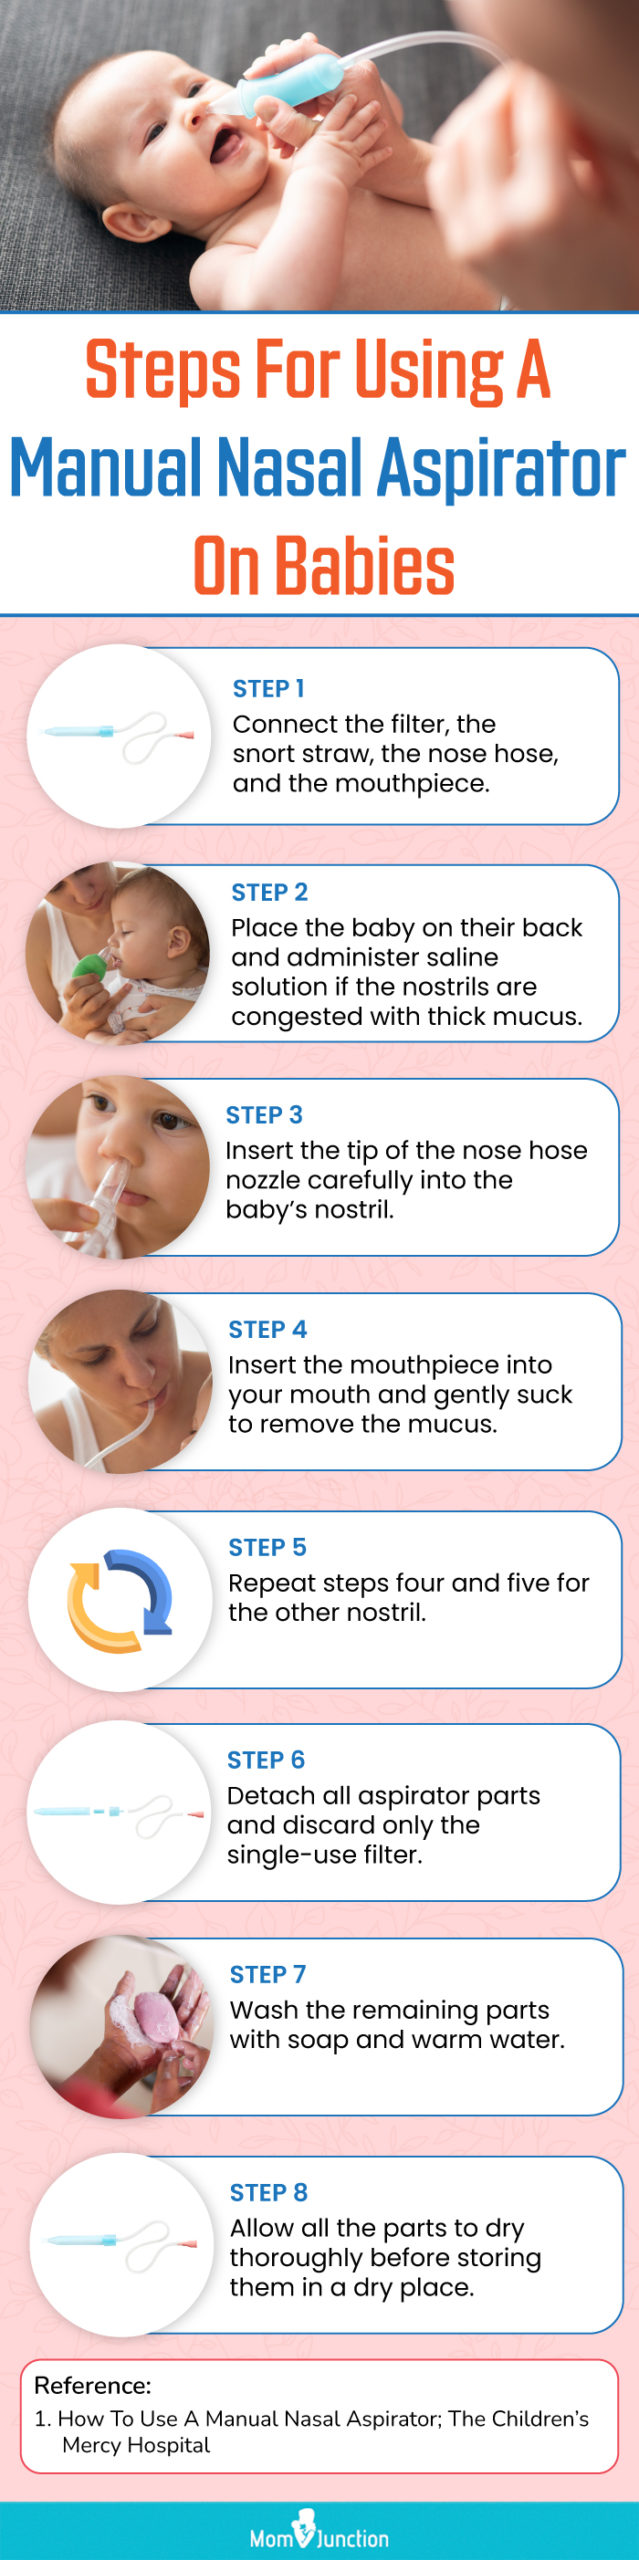 100-Pack of Premium Nasal Aspirator Hygiene Filters, Replacement for NoseFrida Nasal Aspirator Filters, BPA, Phthalate & Latex-Free